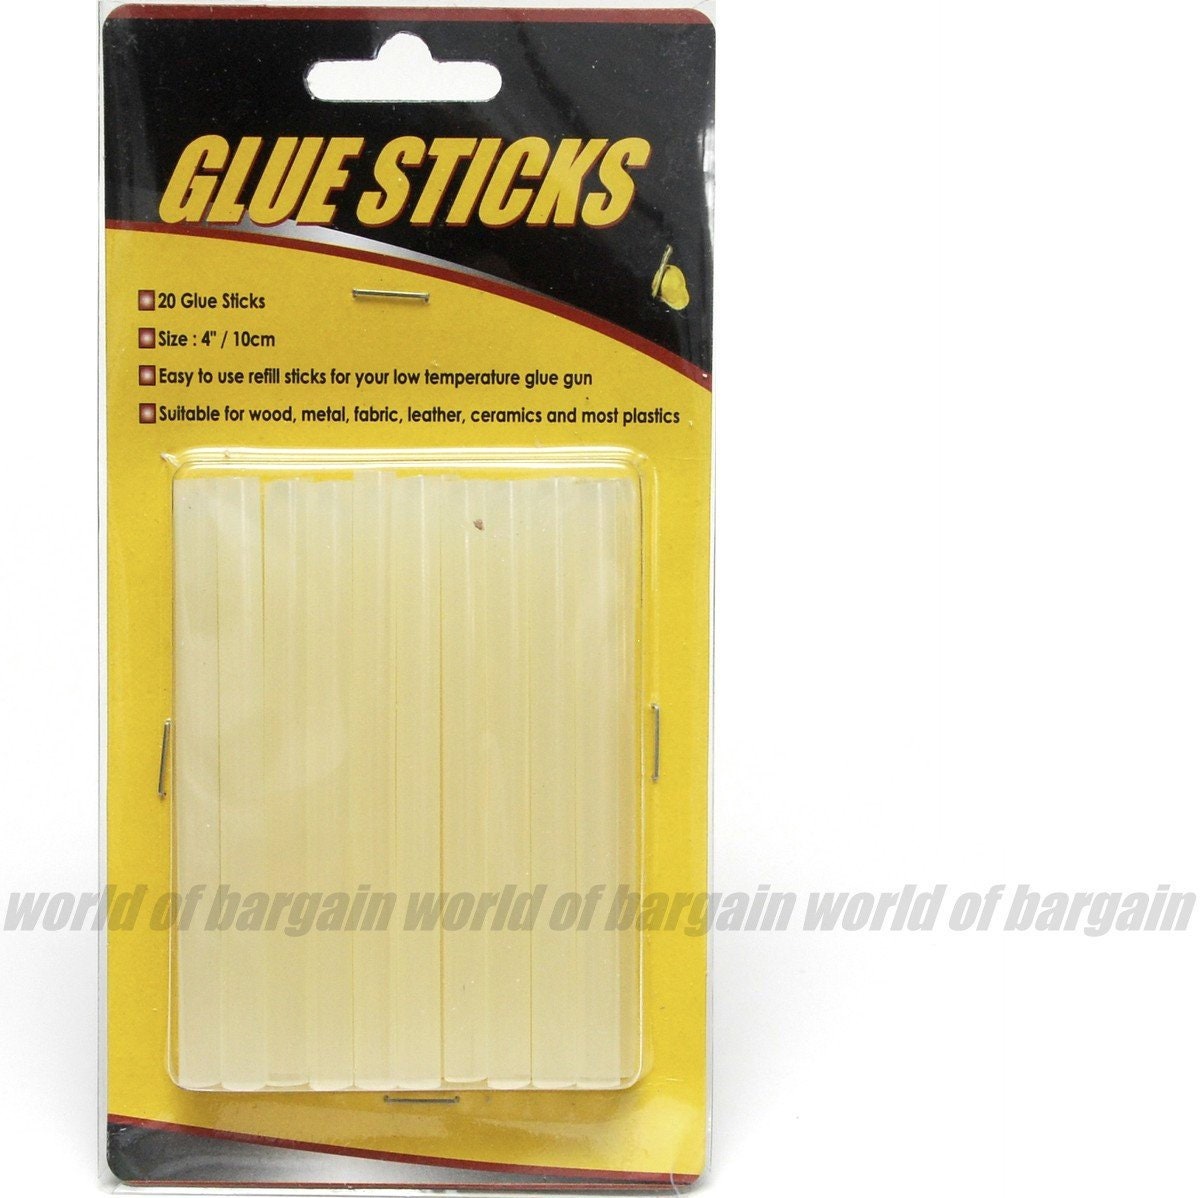 20 Ct GLUE STICKS for Glue Gun 10cm X 4 Inch Long Hot Melt Translucent  Stick C24 